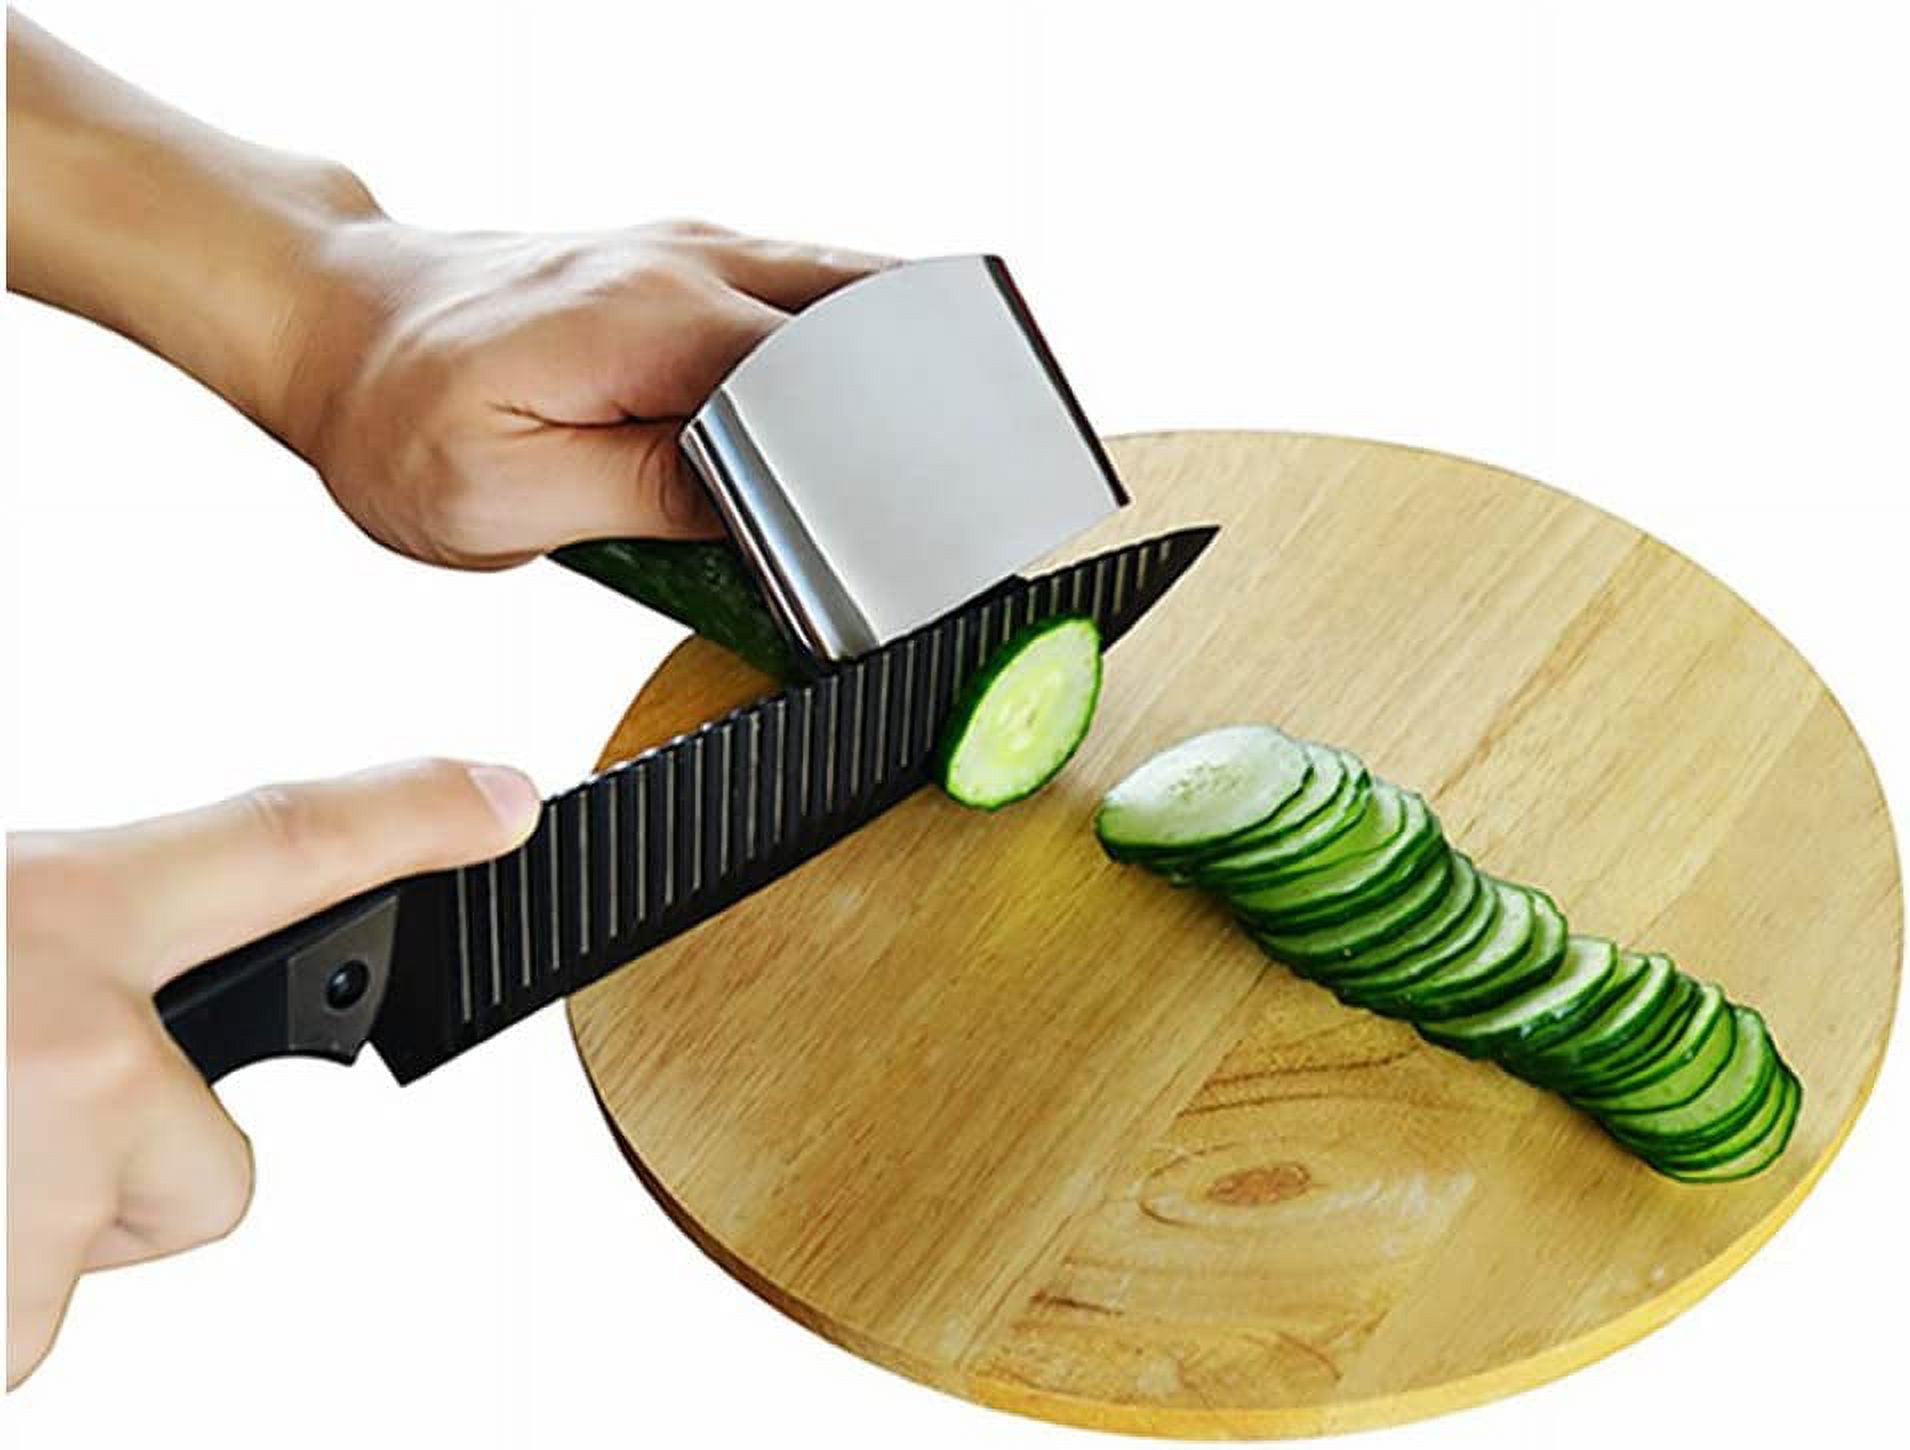 1Pcs Onion Holder Slicer, 2pcs Finger Guard, Holder Slicer Vegetable for Onion, Tomato, Lemon, Meat, Onion Cutting Tool Stainless Steel Cutting